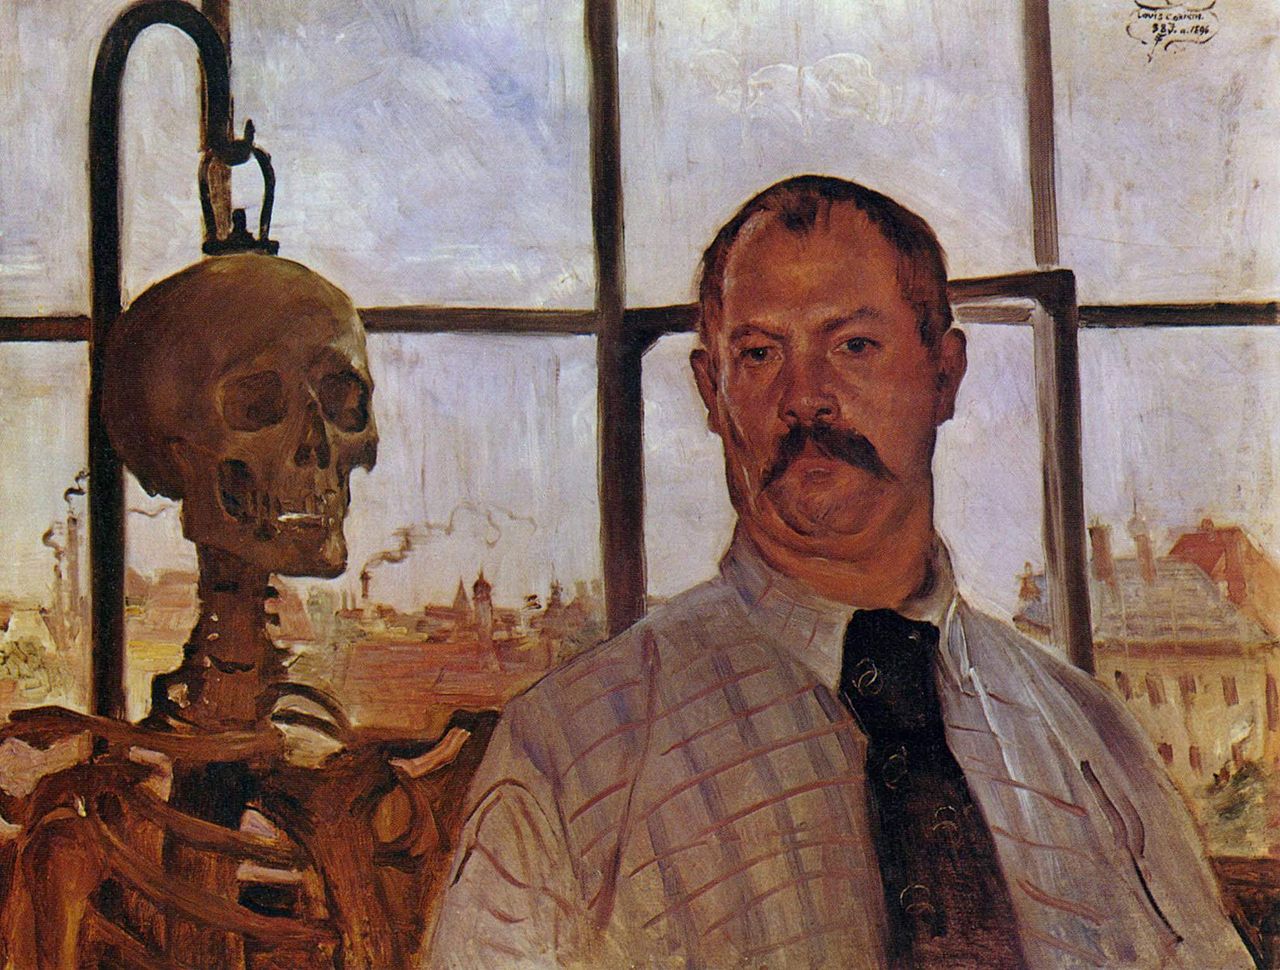 Lovis Corinth, Self Portrait with Skeleton (1896)